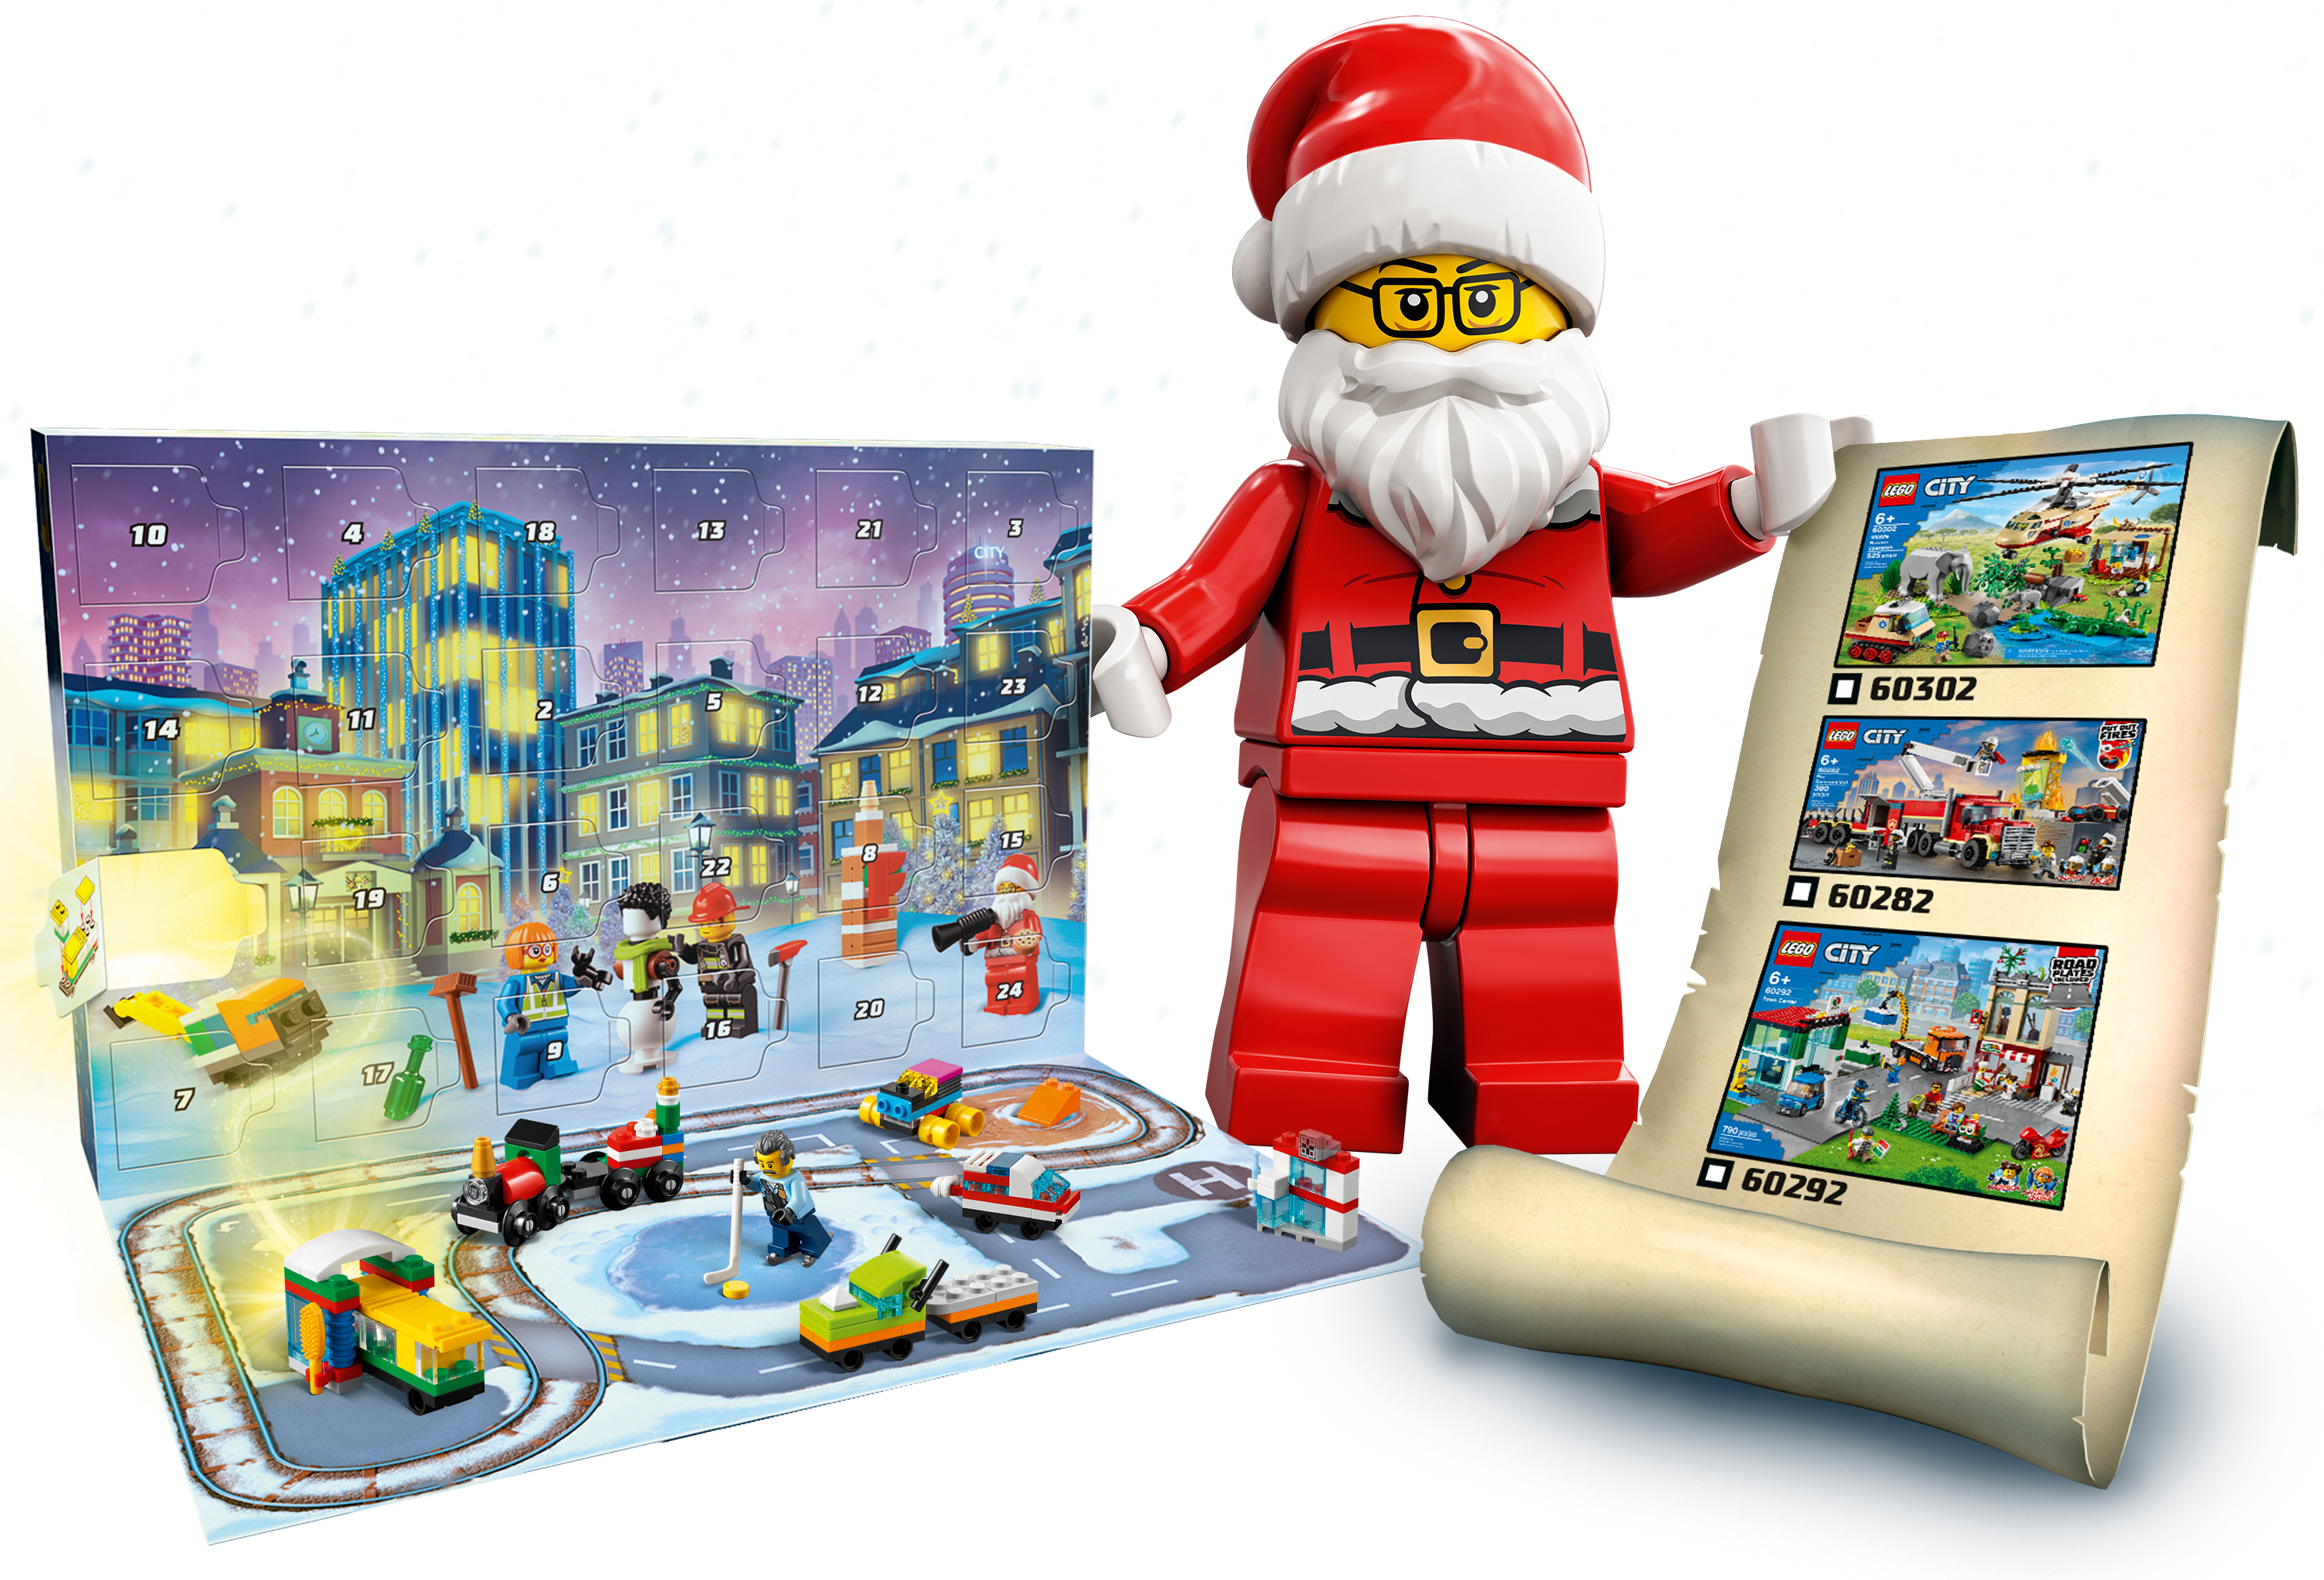 City julekalender 60303 | | Officiel LEGO® Shop